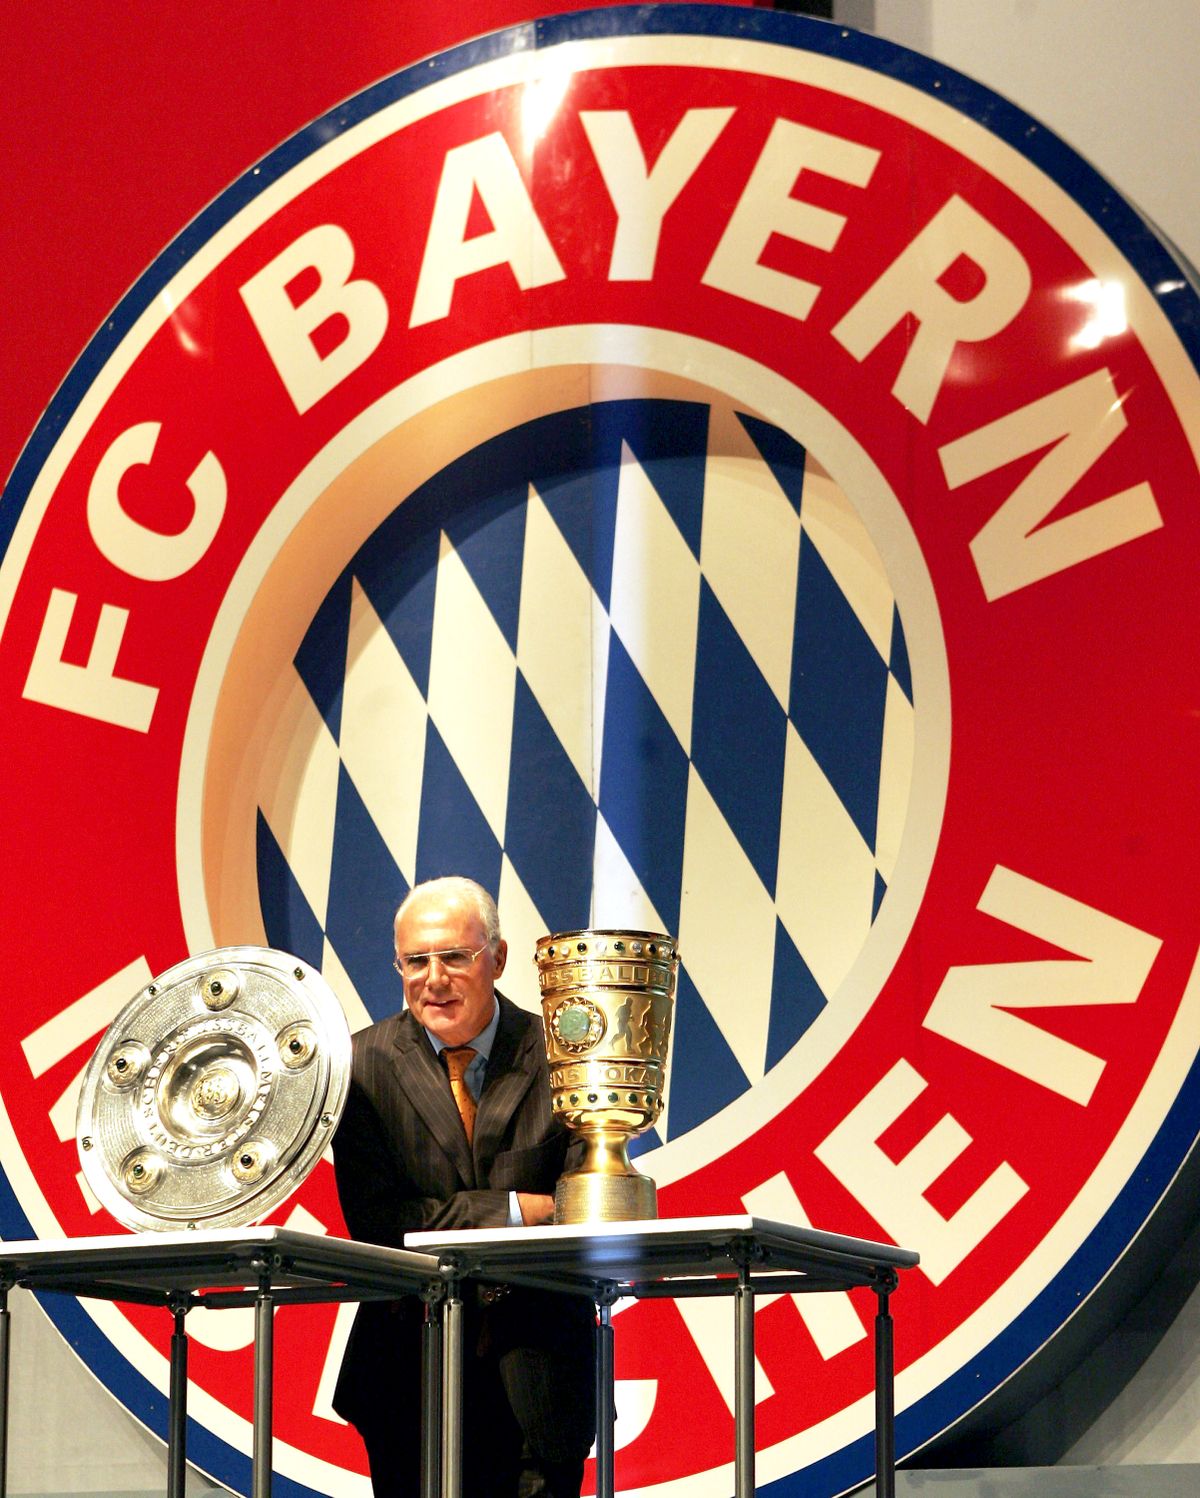 Bayern Munich General Annual Meeting